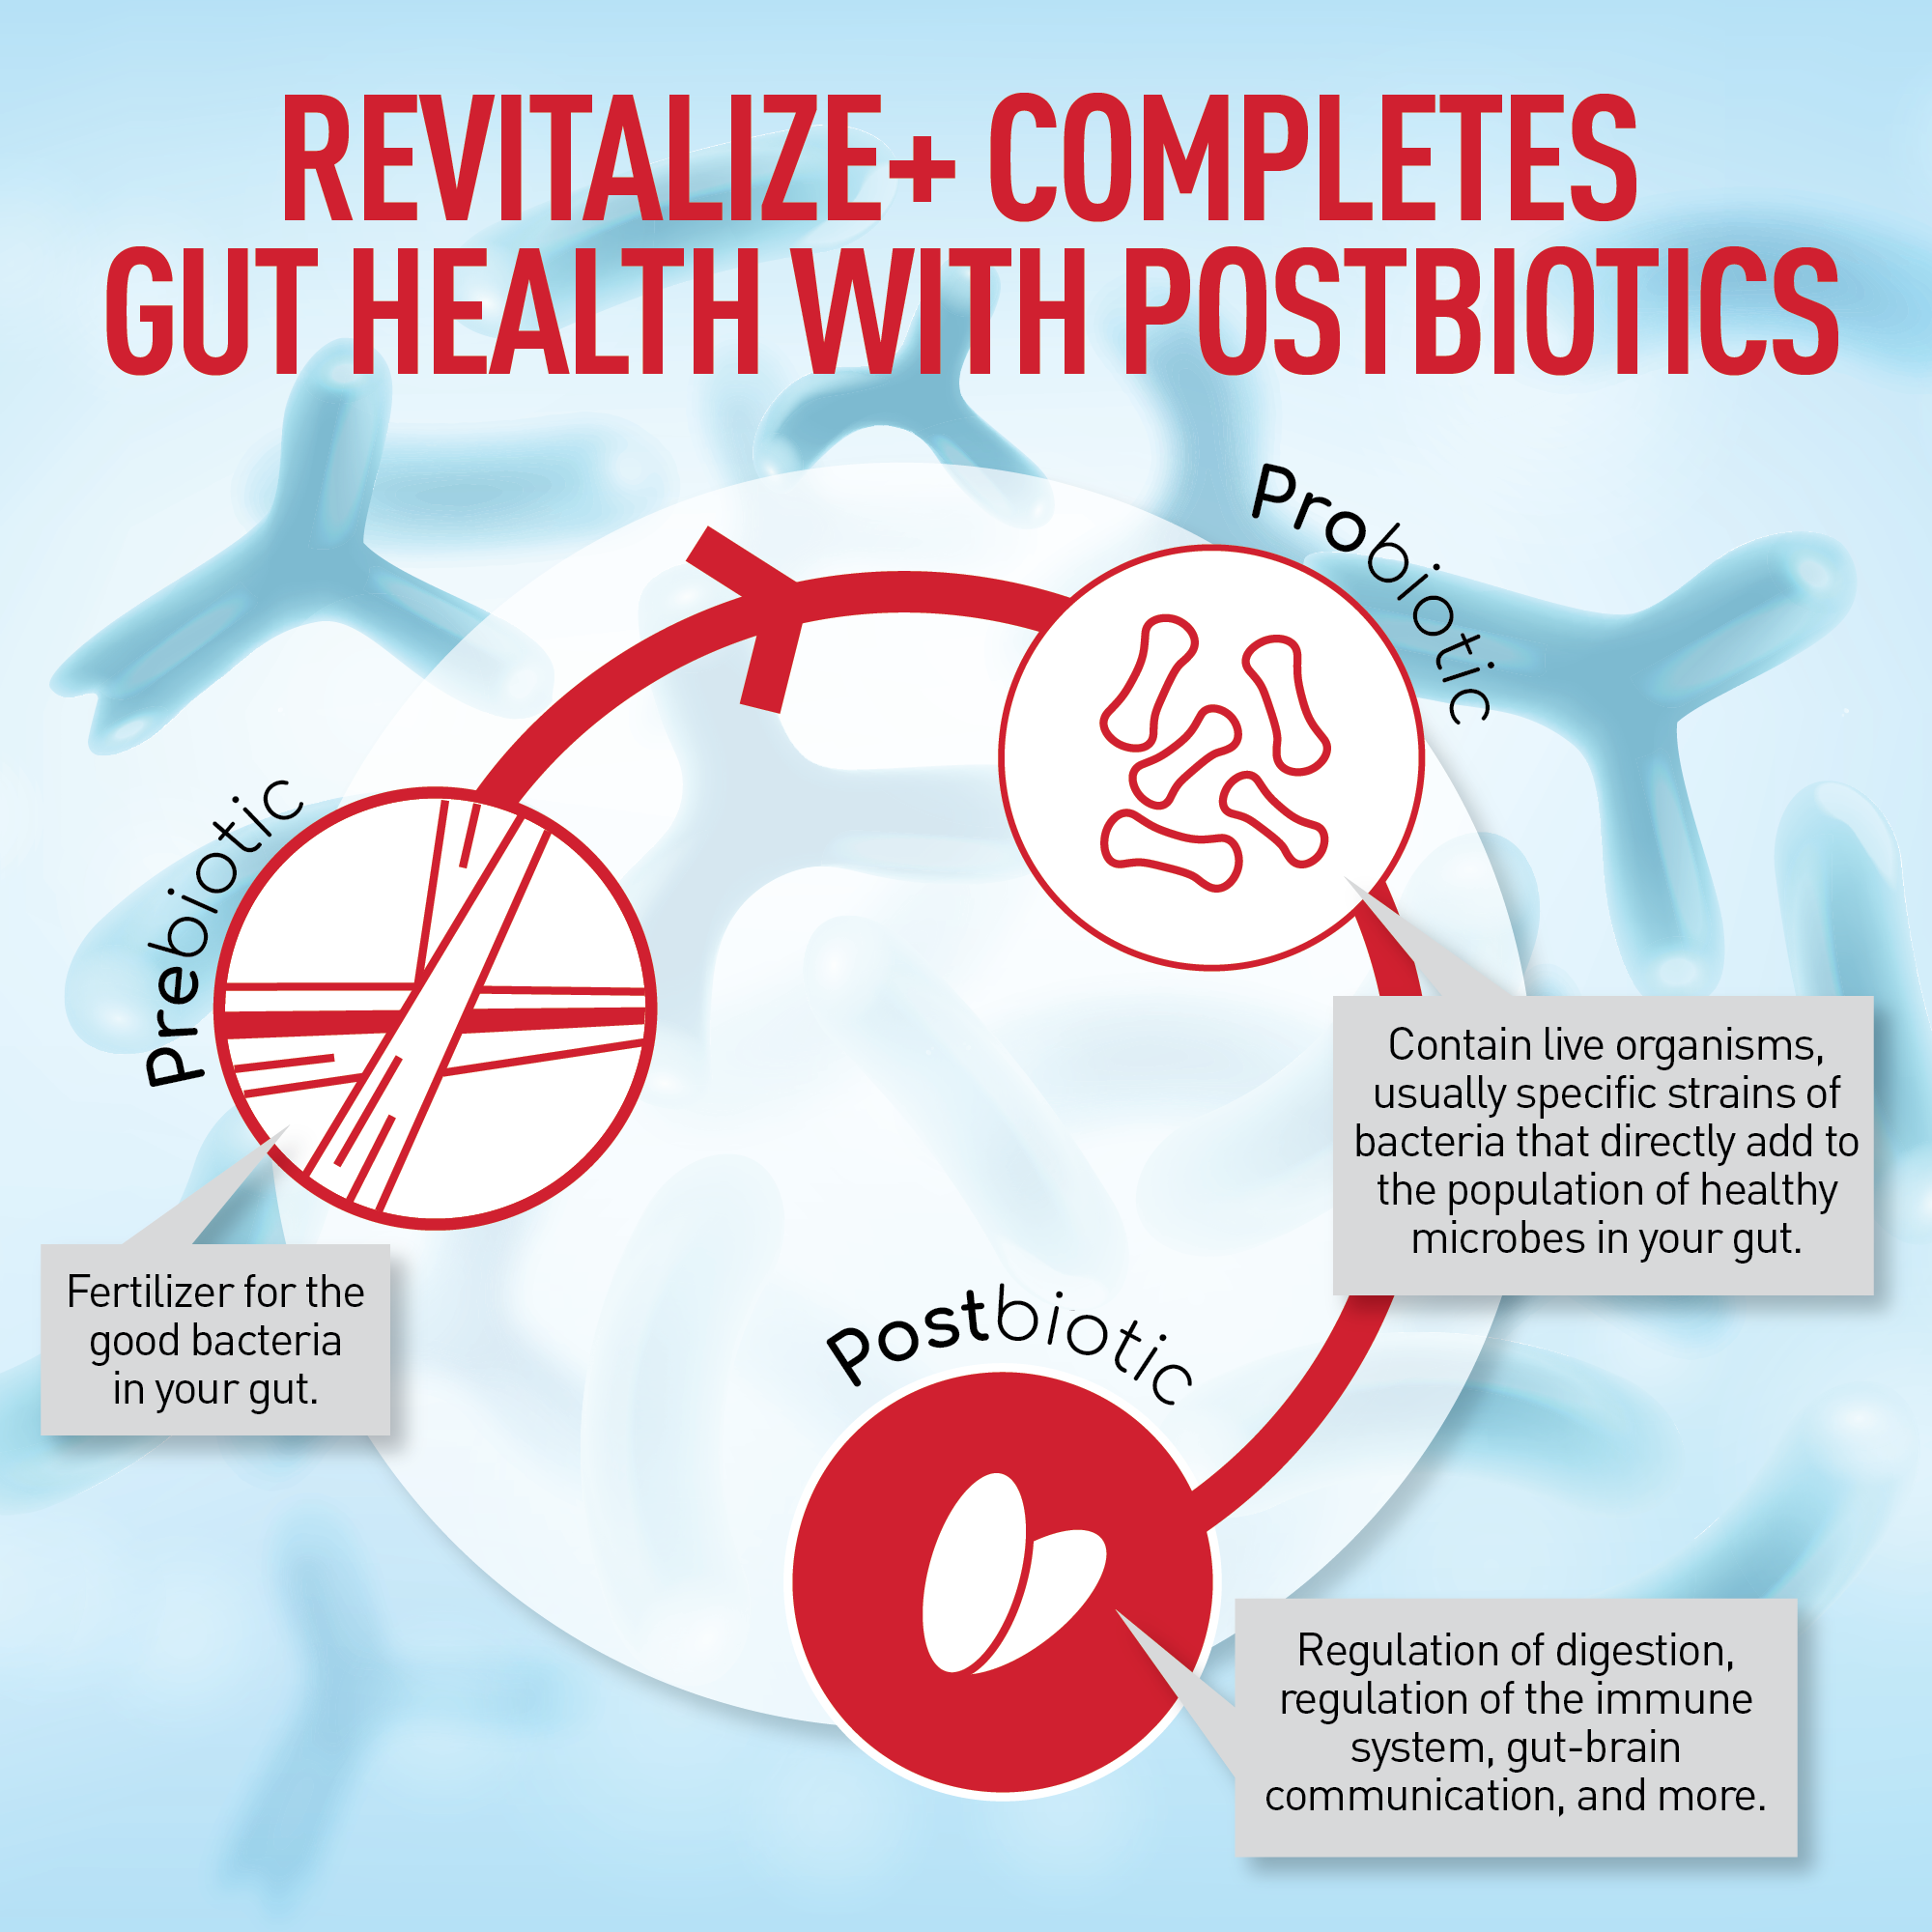 Revitalize+™ Advanced Gut Health Supplement for Gut, Colon & Immune Support